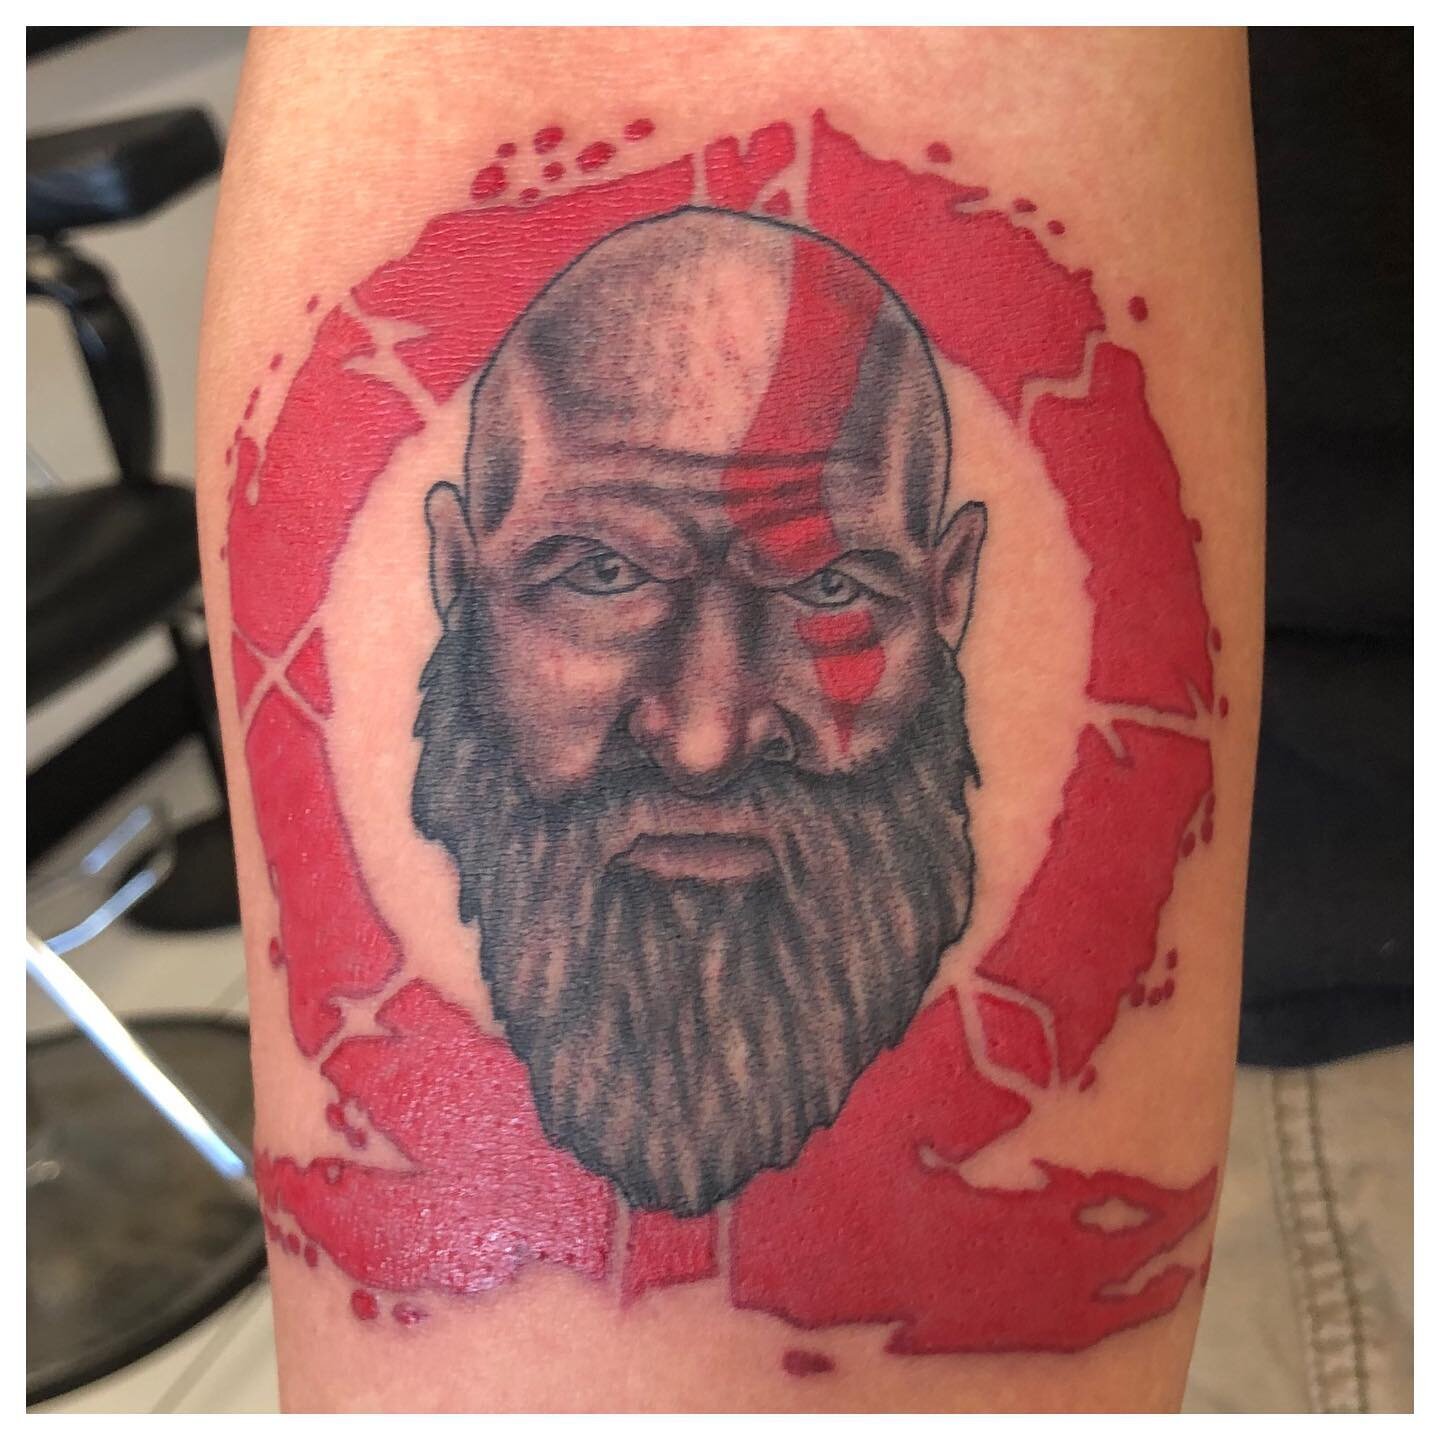 Started my day with this #kratos #tattoo from #godofwar . #kratostattoo #godofwartattoo #myclientsrule #homewardboundtattoo #wisconsintattooartist